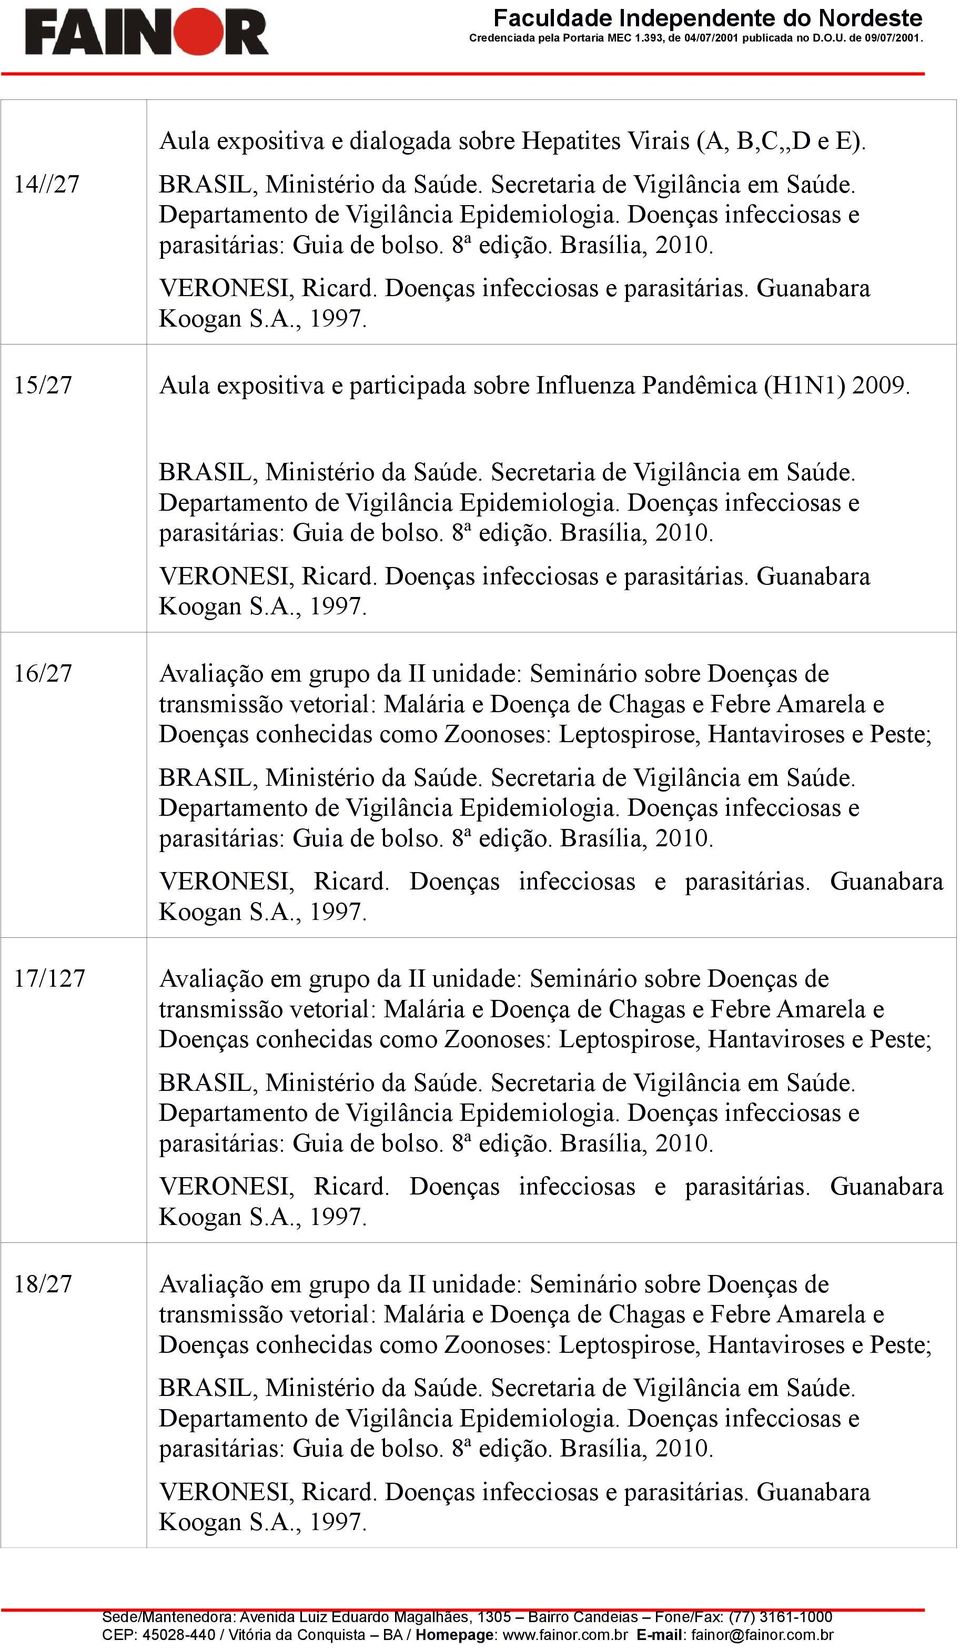 15/27 Aula expsitiva e participada sbre Influenza Pandêmica (H1N1) 2009.